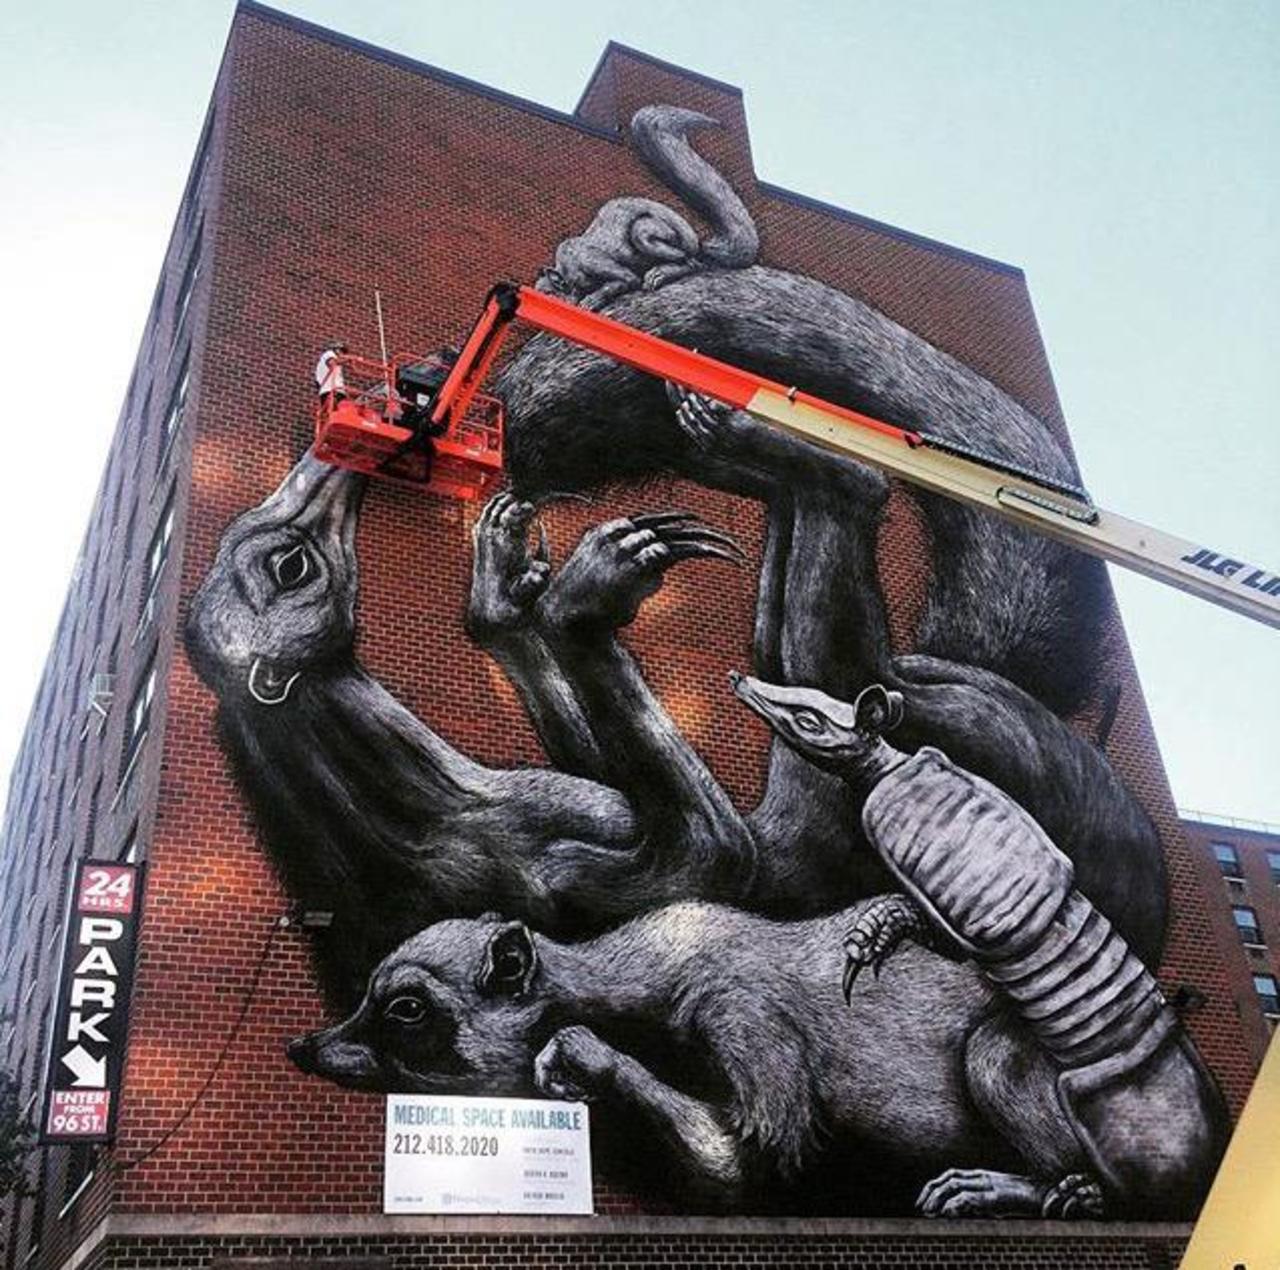 New tumblr post: "Street Art in progress by ROA in NYC

#art #graffiti #mural #streetart http://t.co/gdEUPjlftE" http://ift.tt/1k0odo7 …